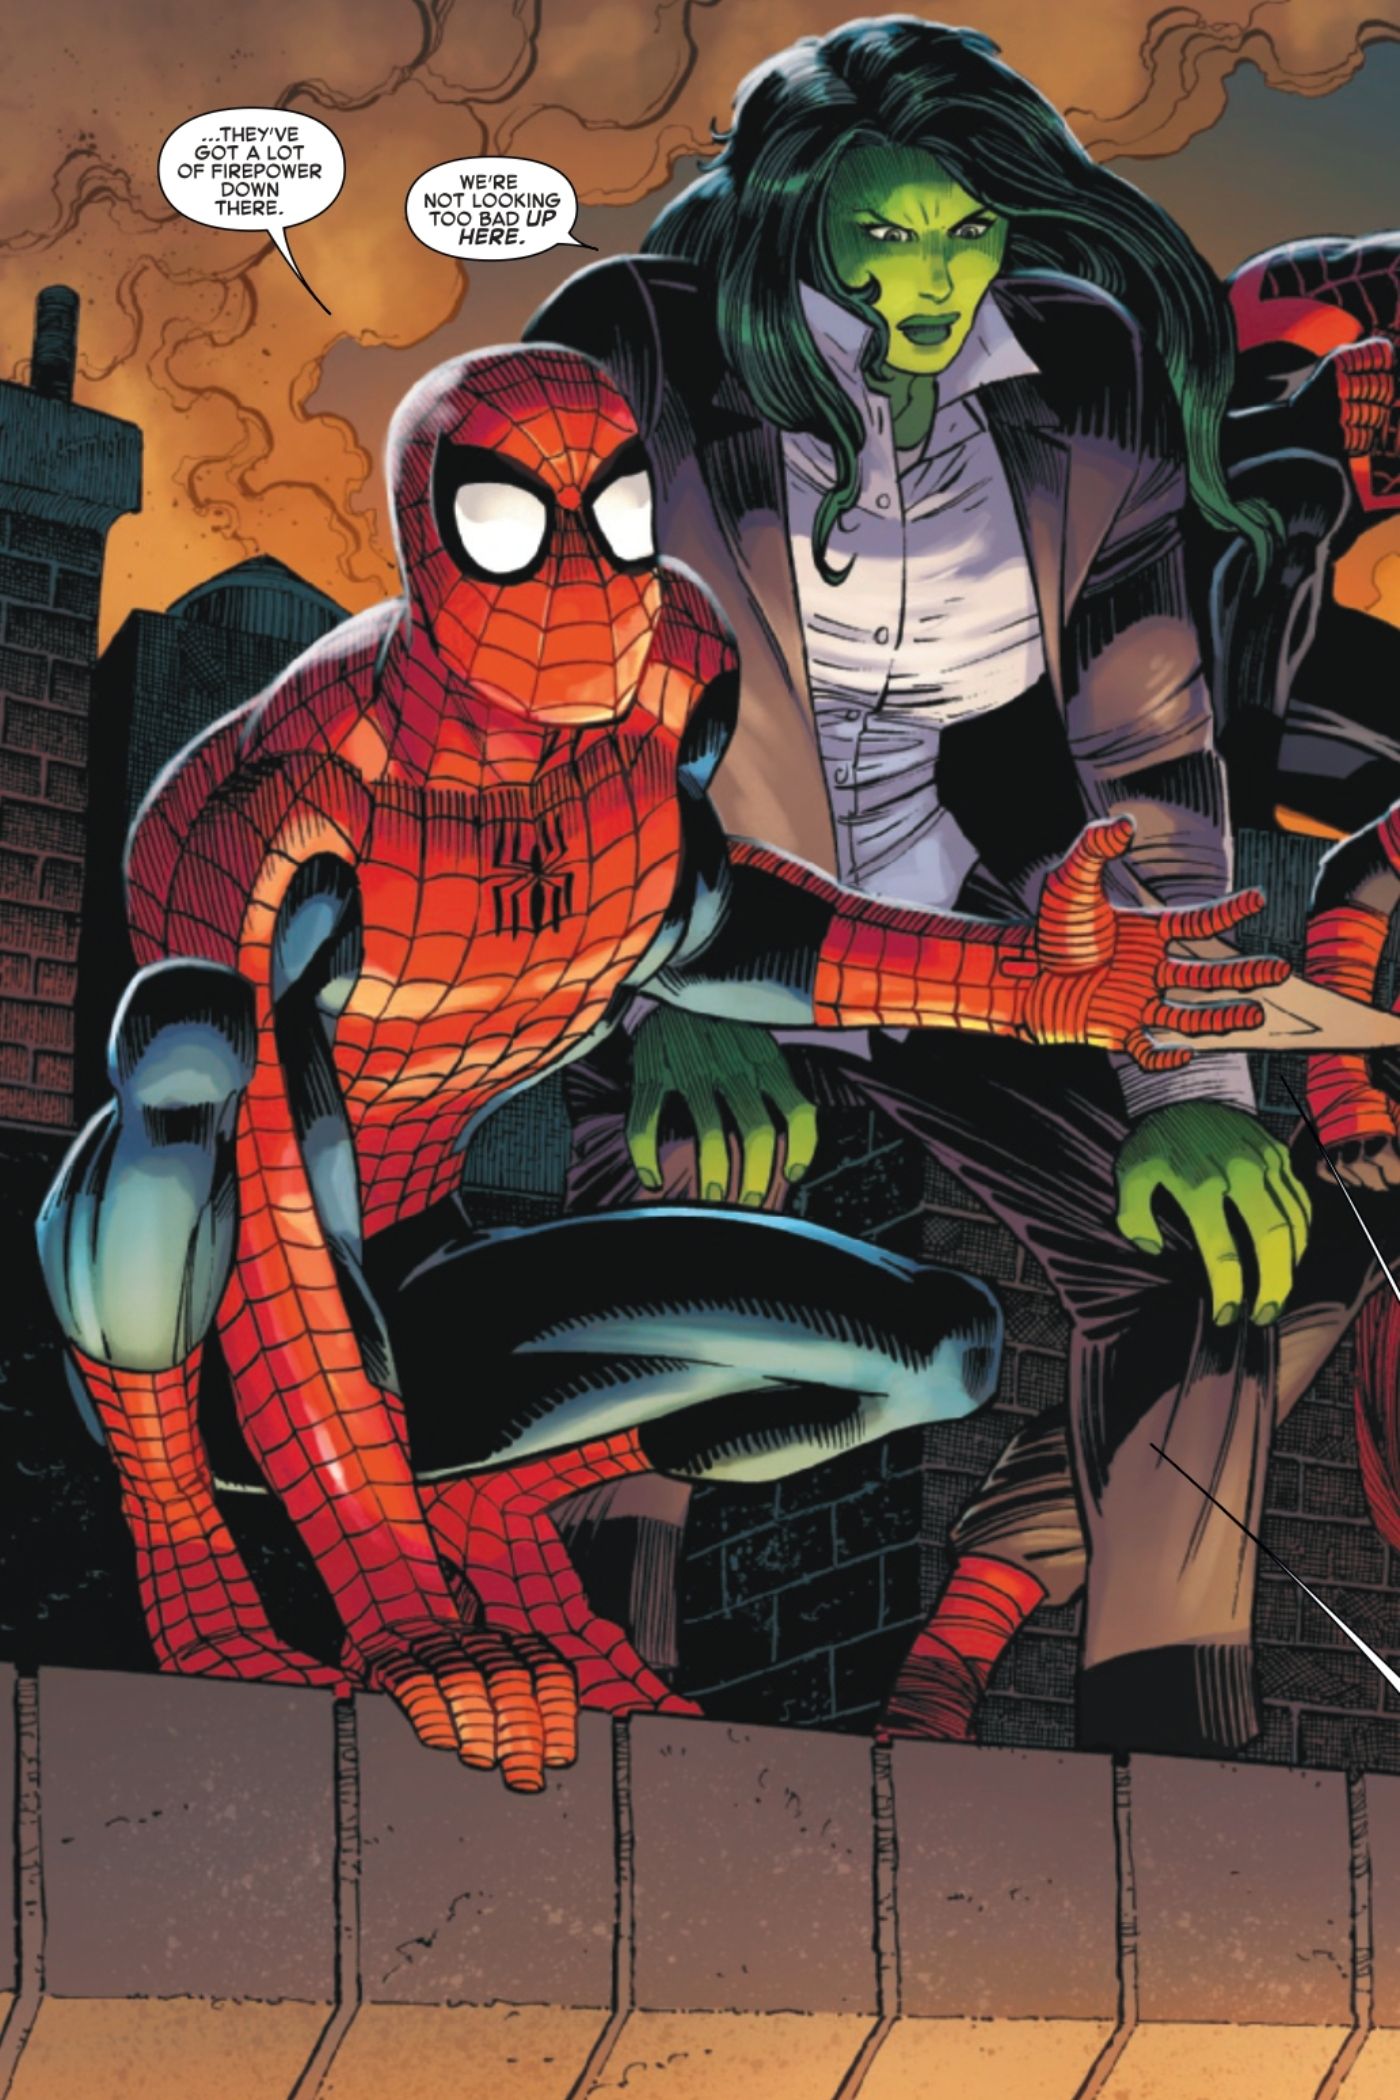 Amazing Spider-Man #39 Vista previa página 2.